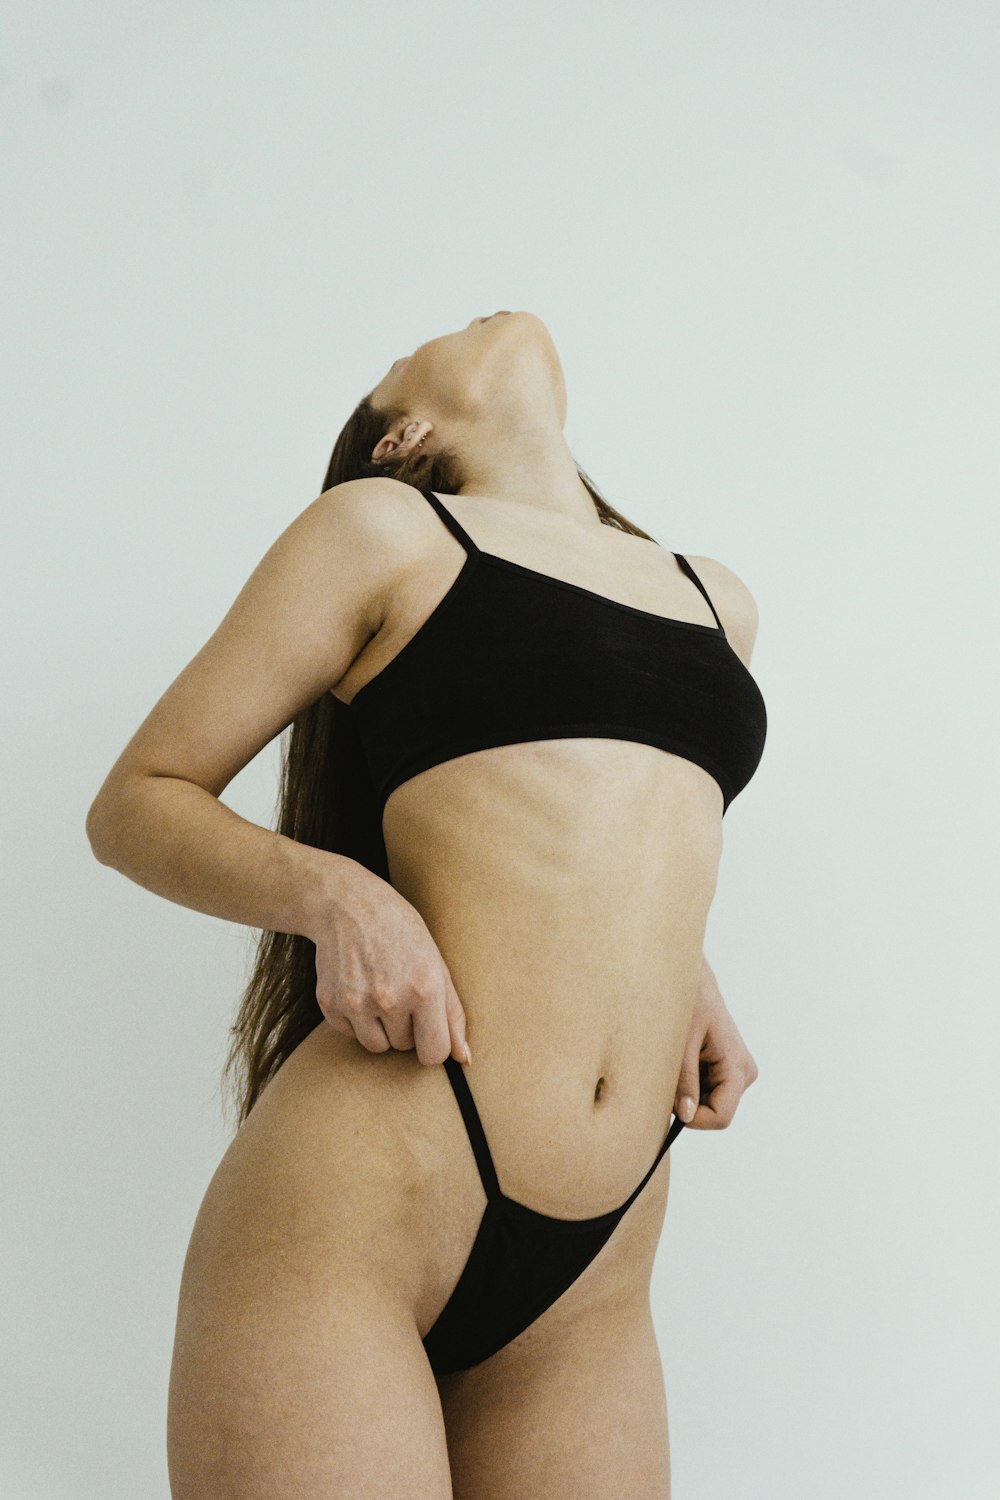 a woman in a black bikini posing for a picture